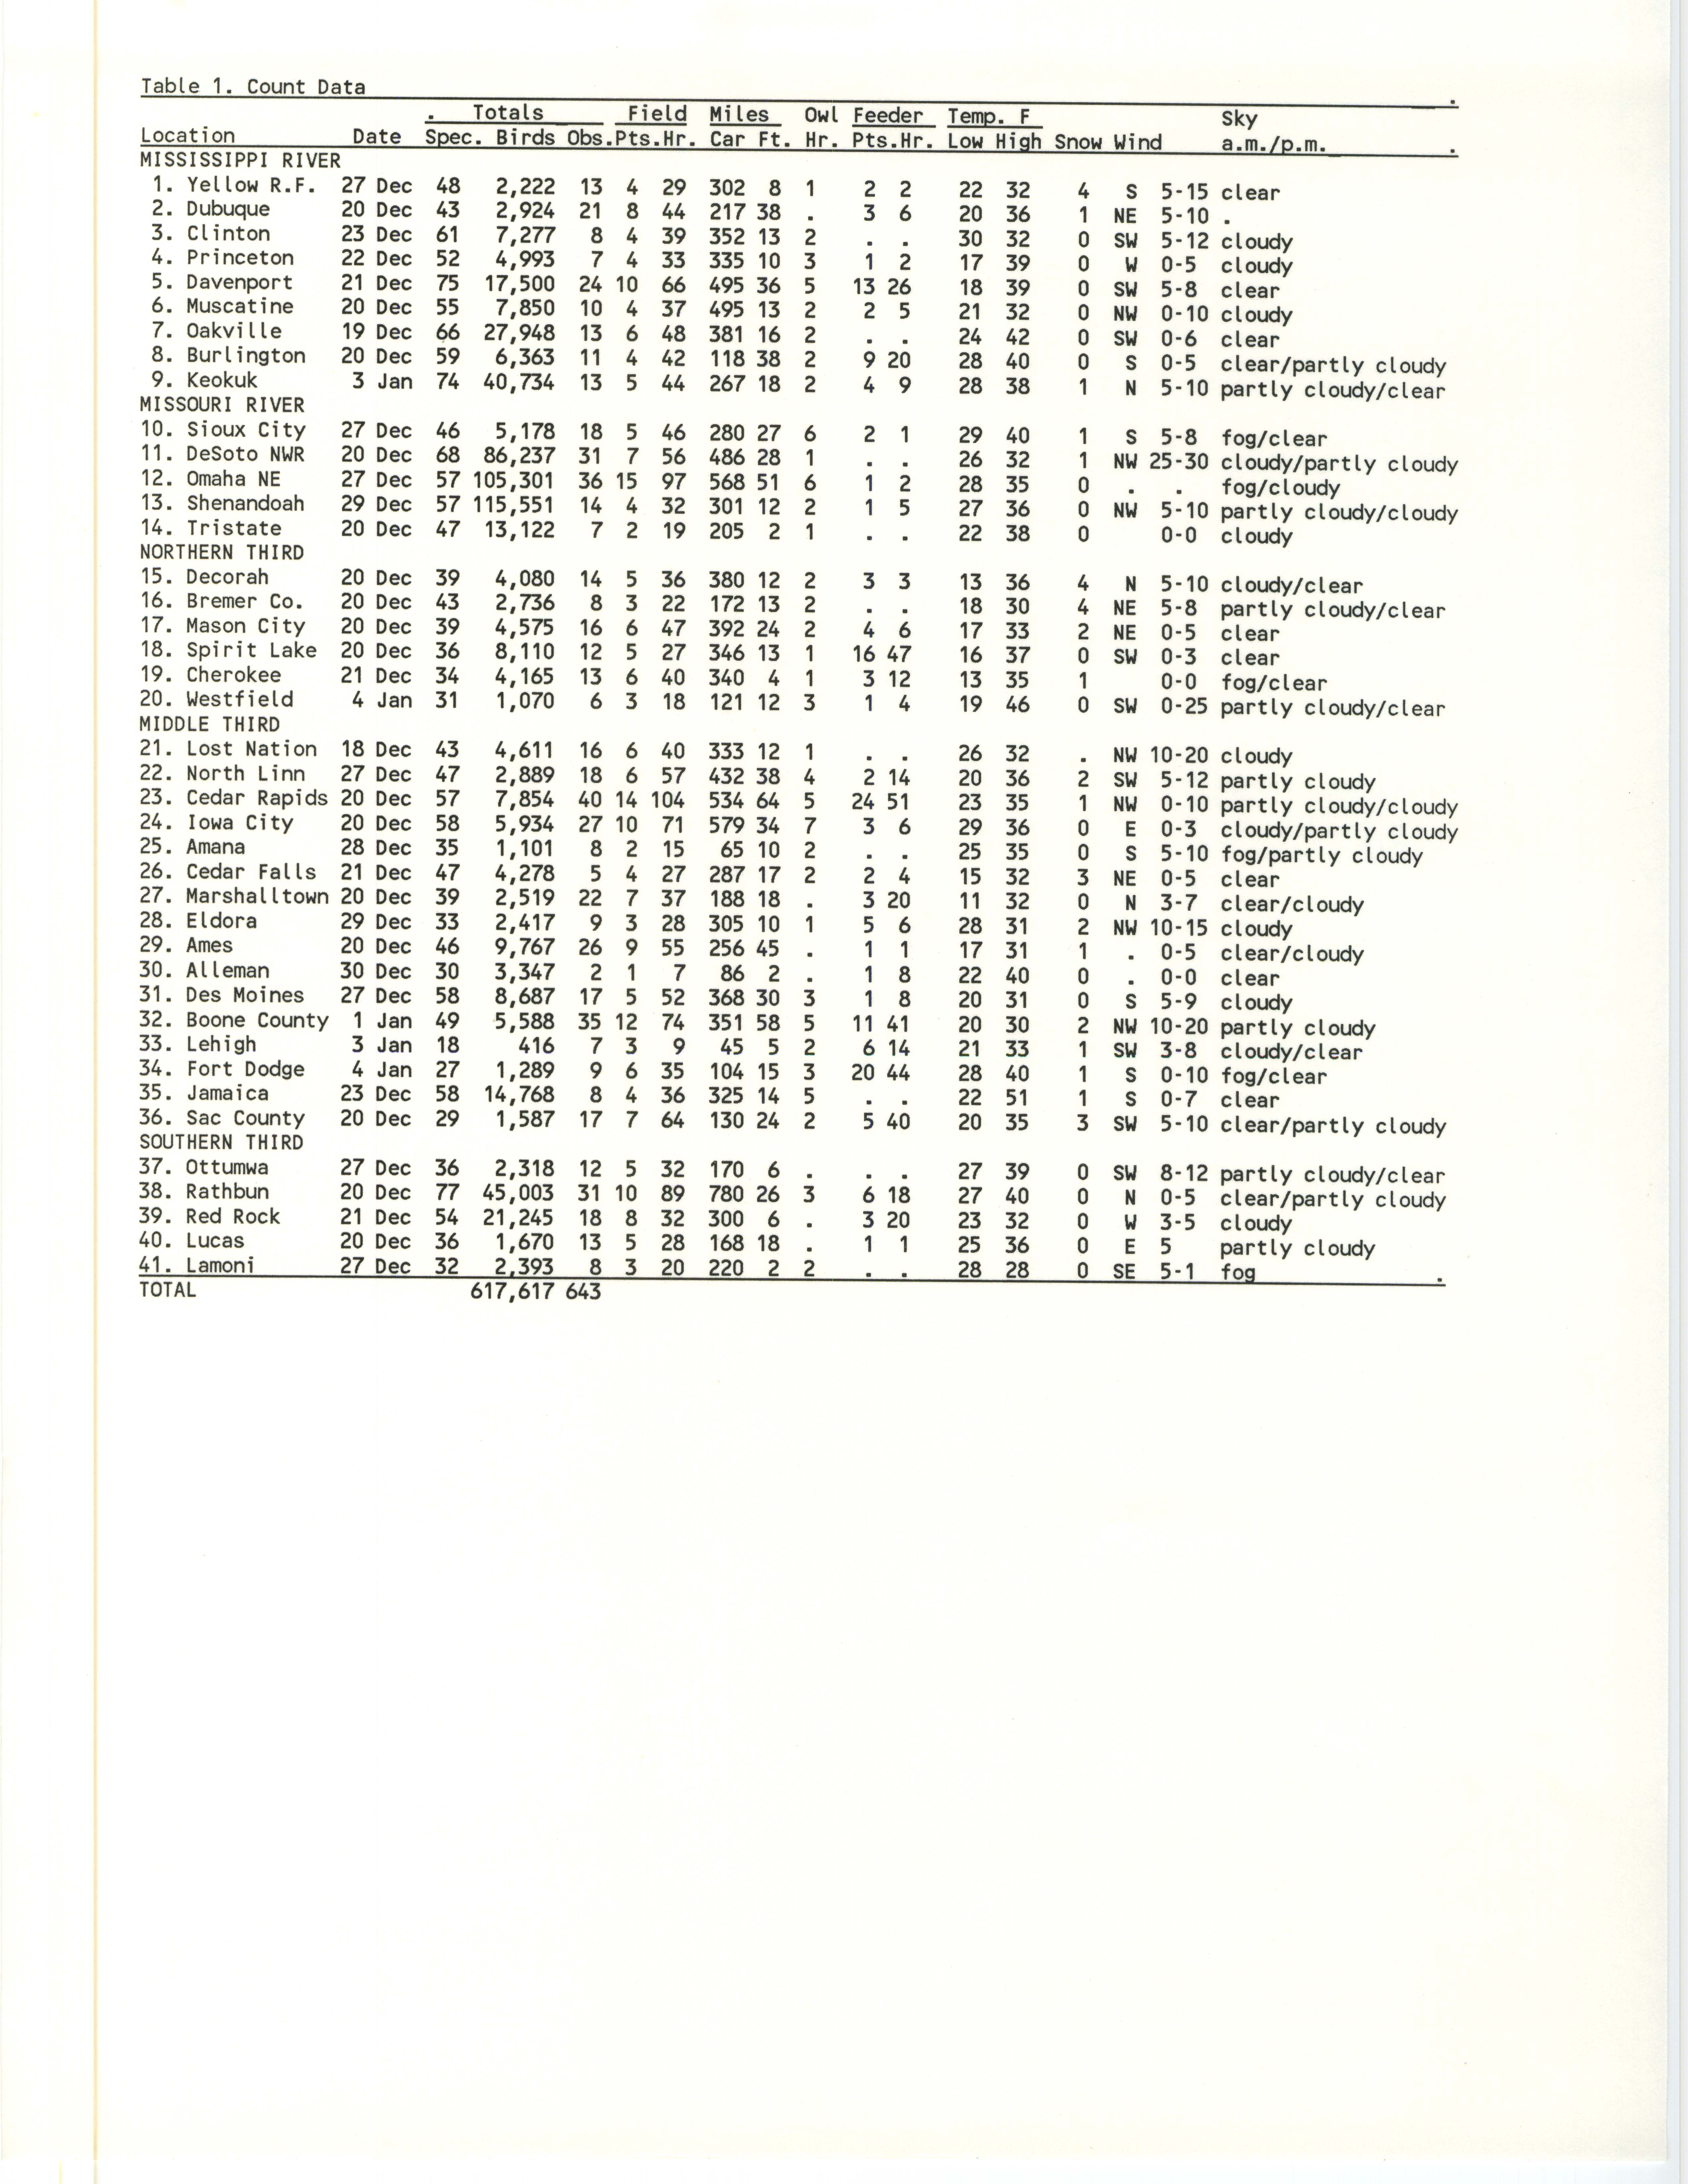 Christmas bird count data table, 1986